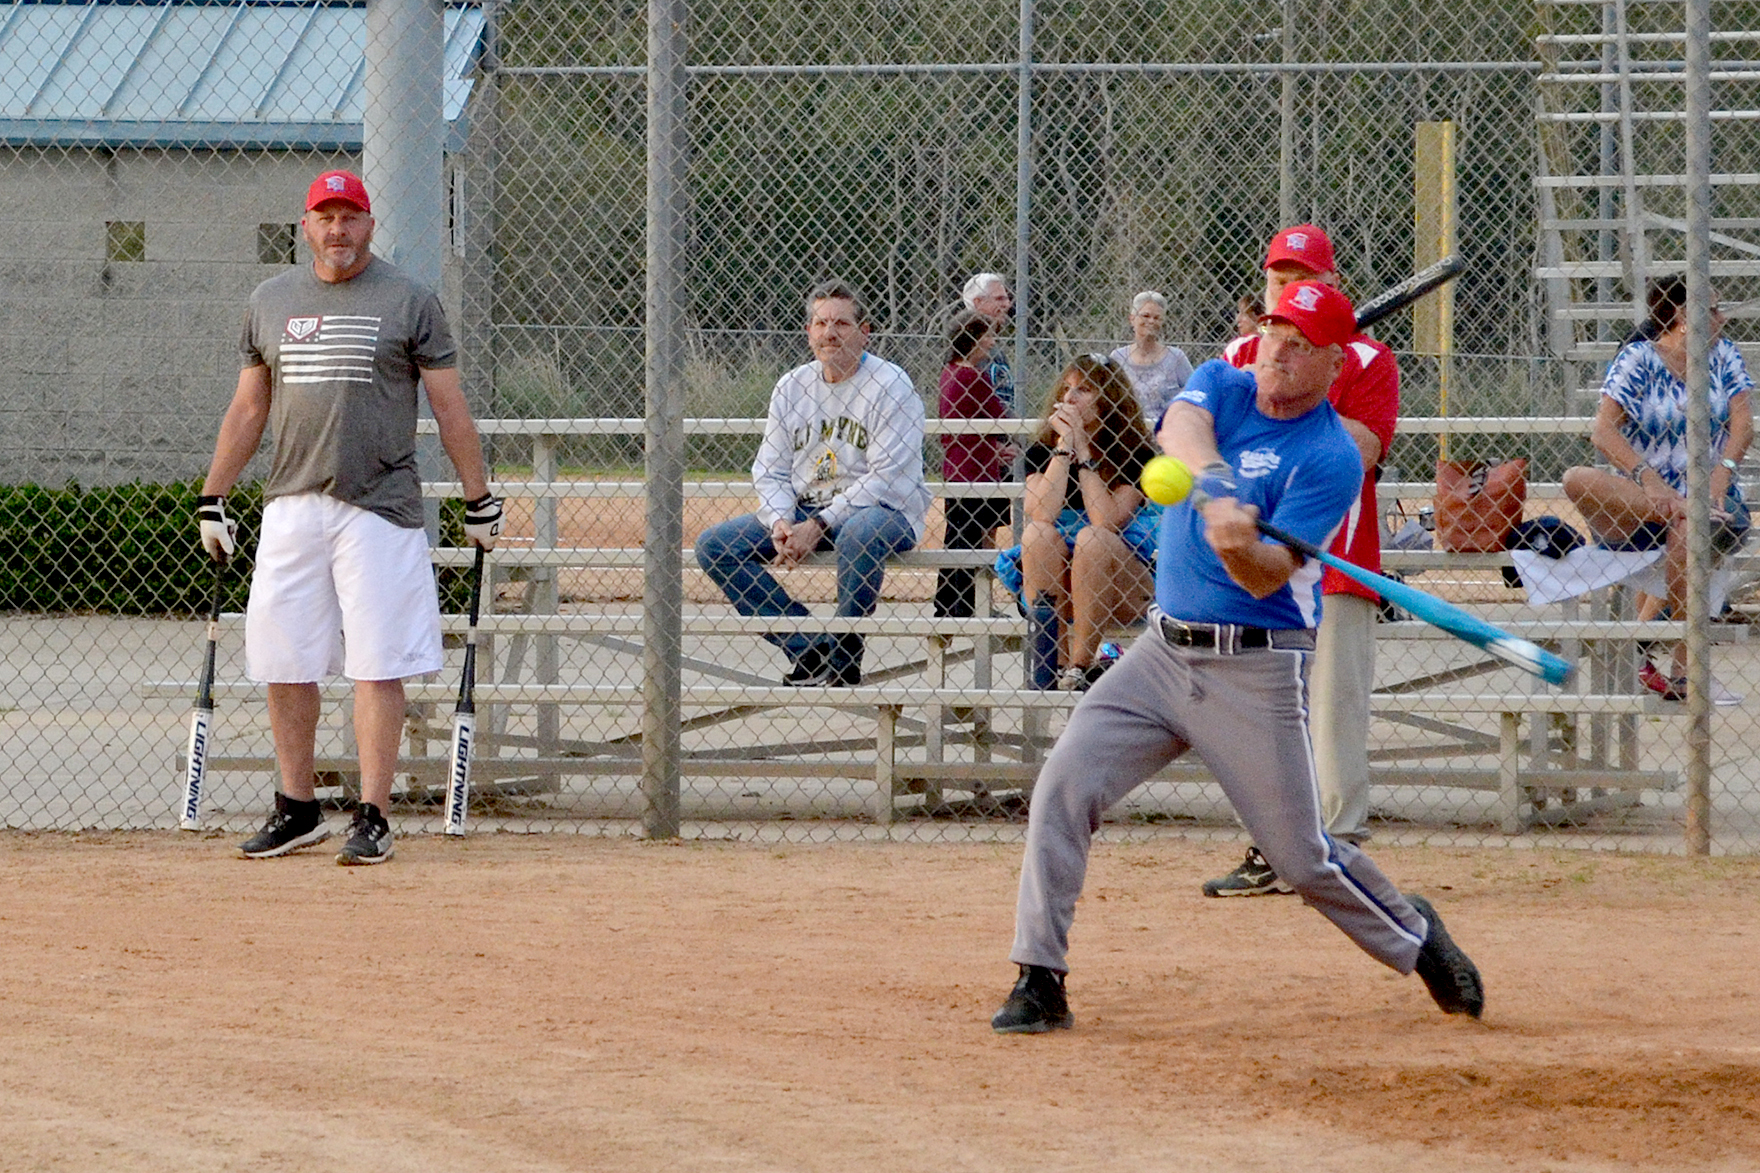 A batter swings during a senior softball event.